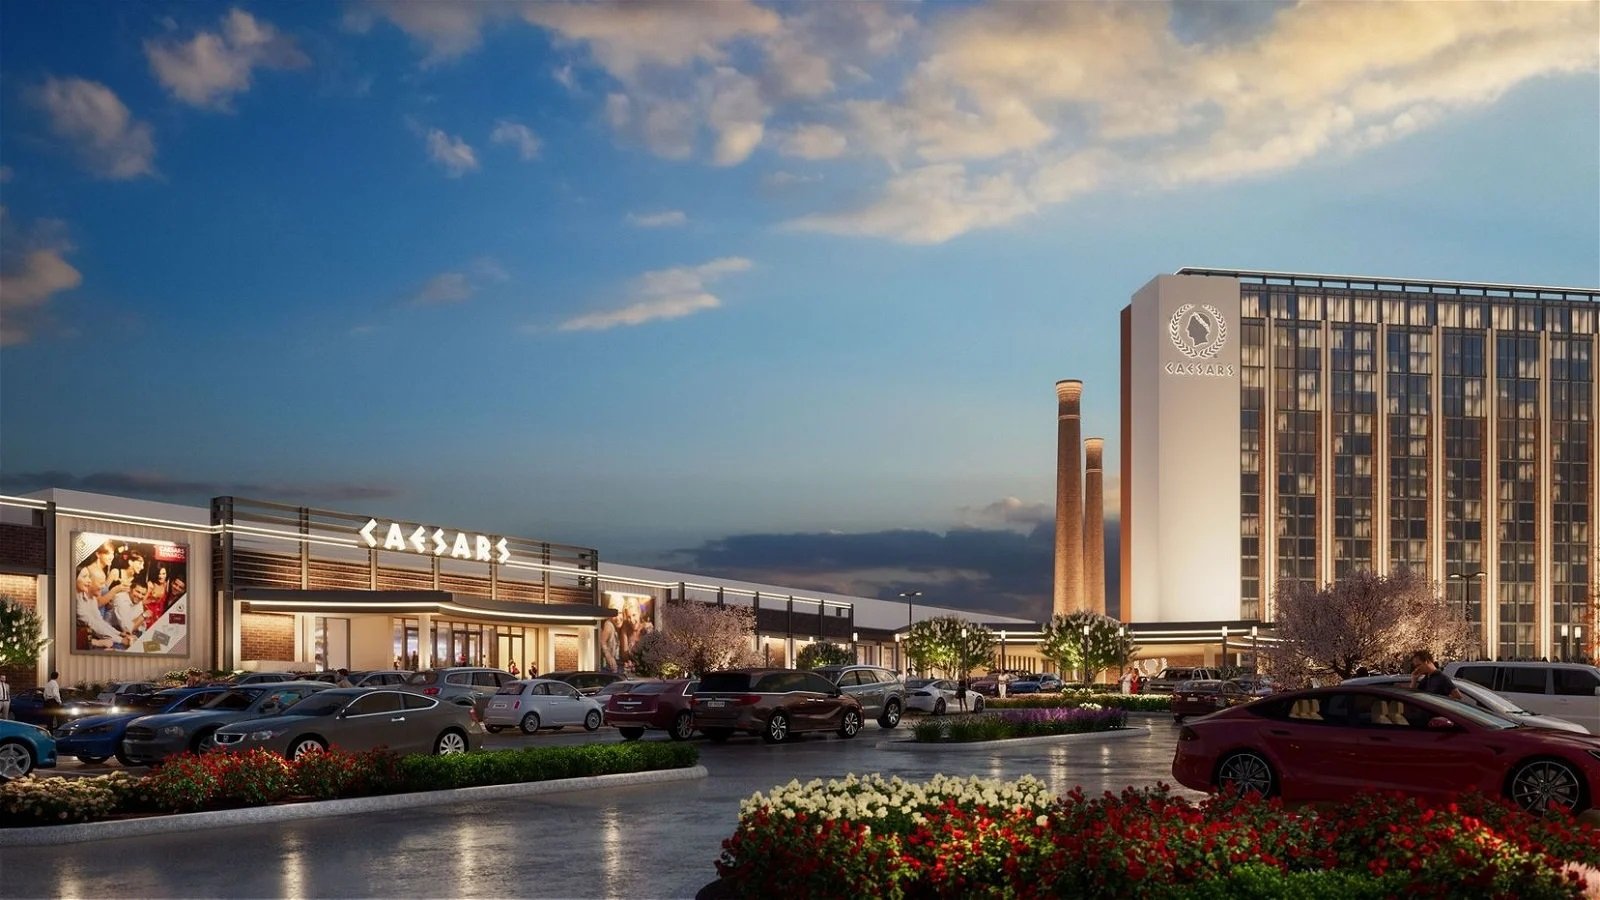 A rendering of the Caesars Virginia resort casino